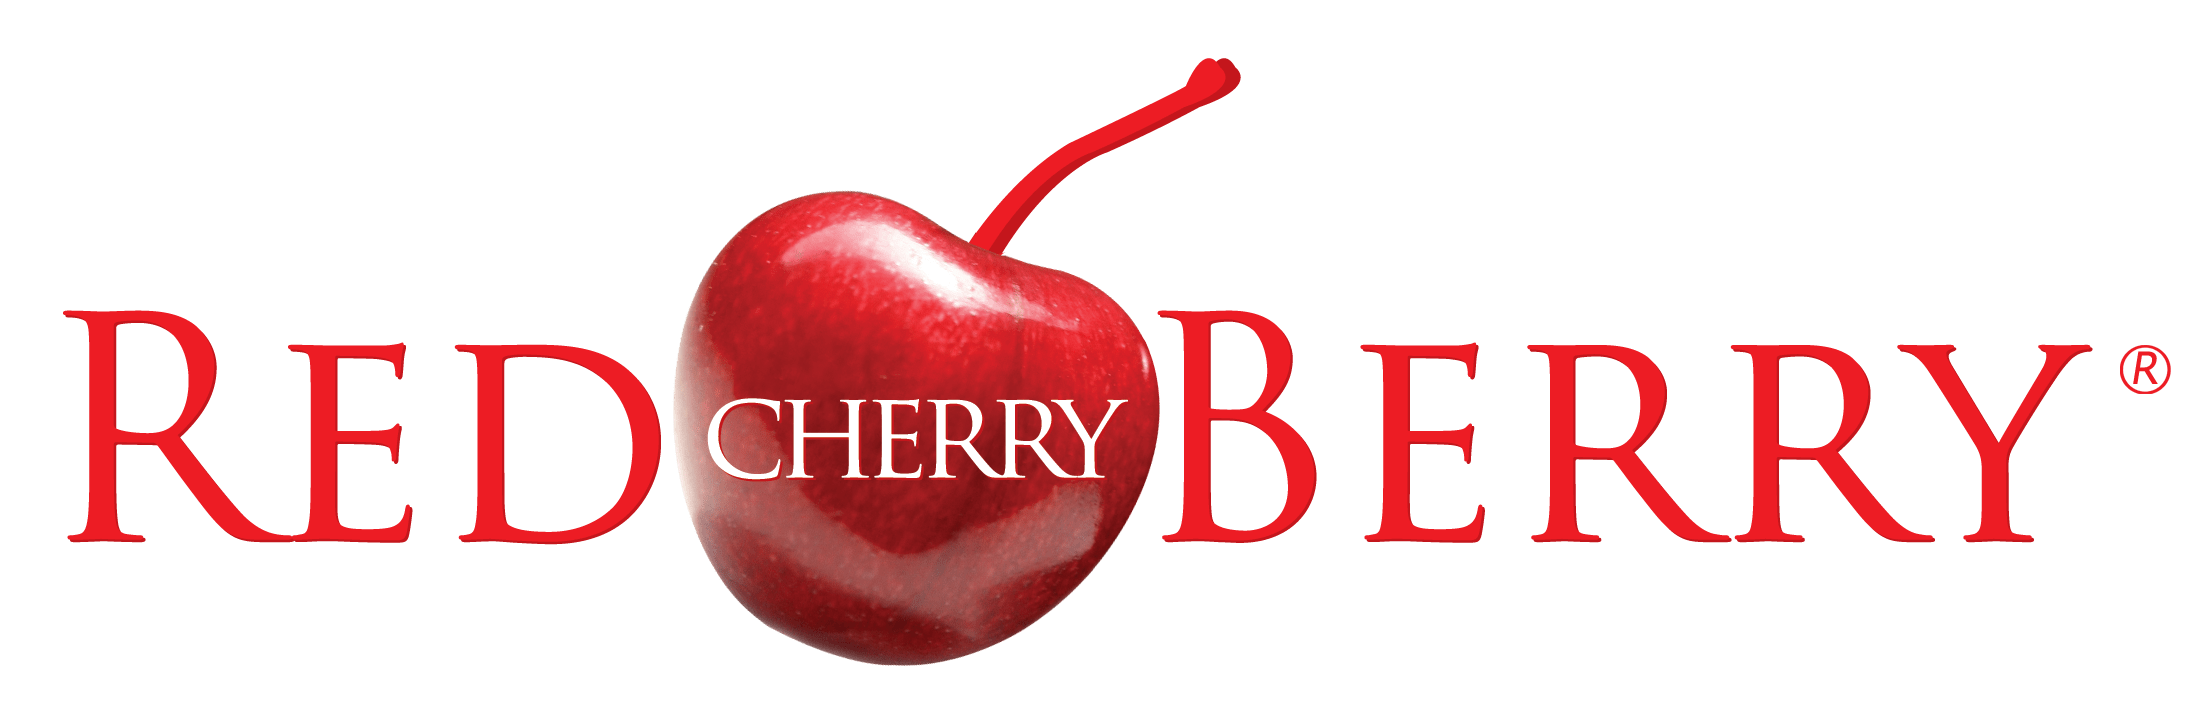 Red Cherry Logo - Red Cherry Berry